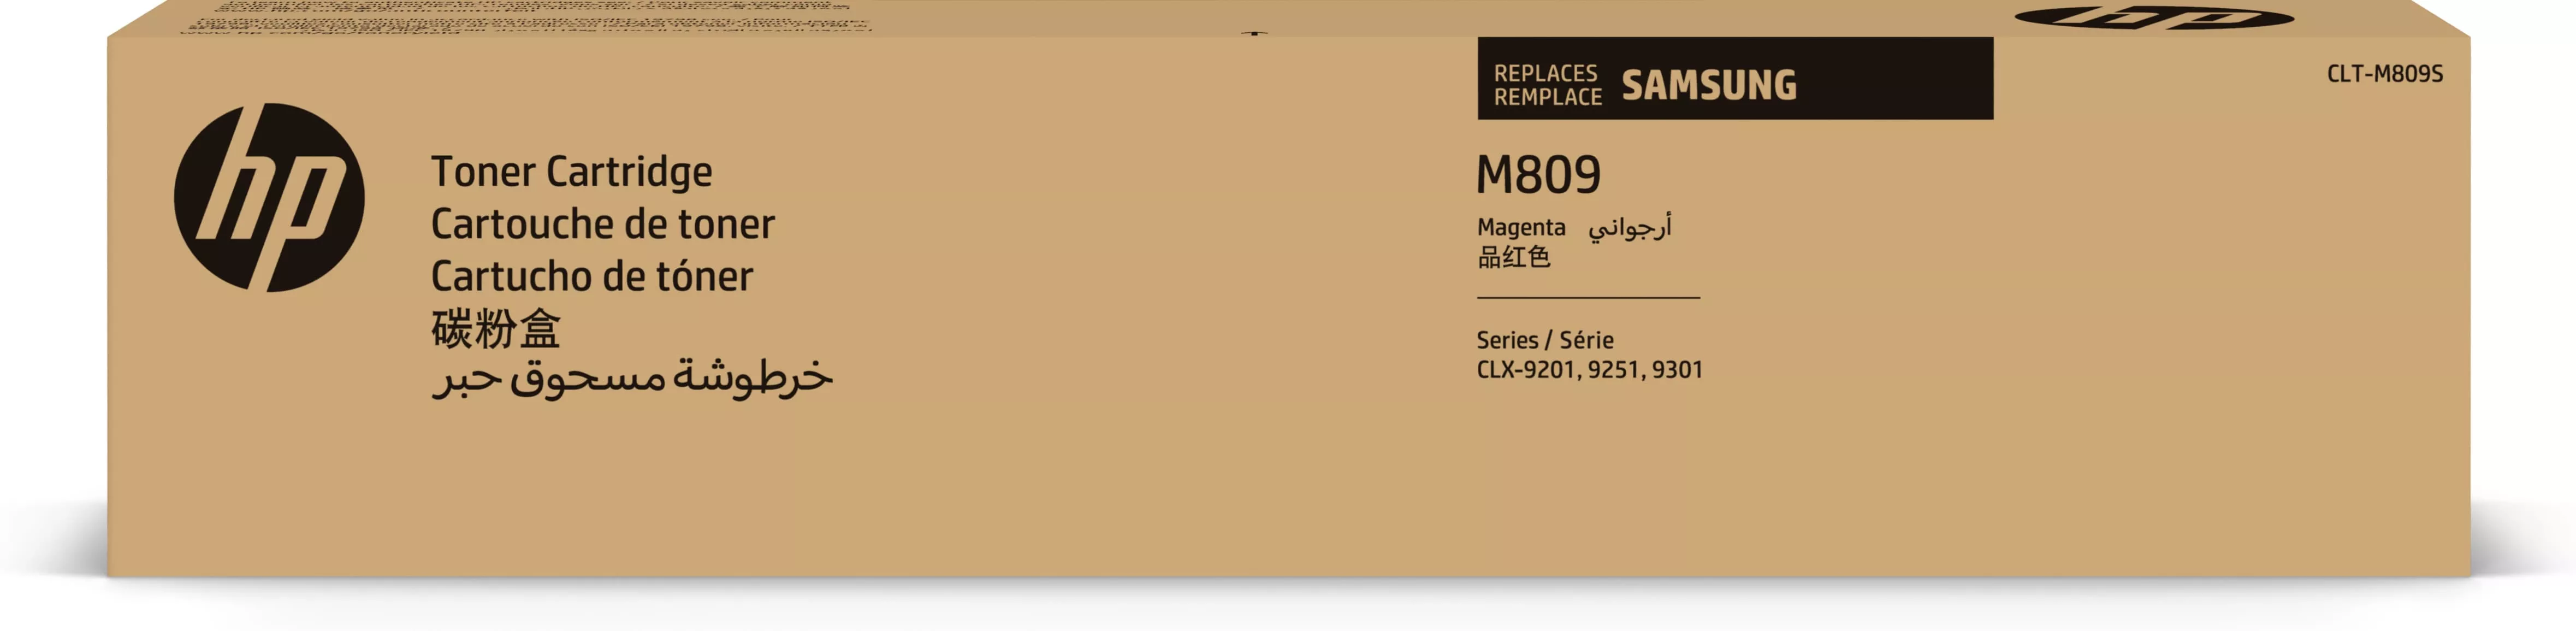 Achat SAMSUNG CLT-M809S/ELS Magenta Toner Cartridge HP au meilleur prix